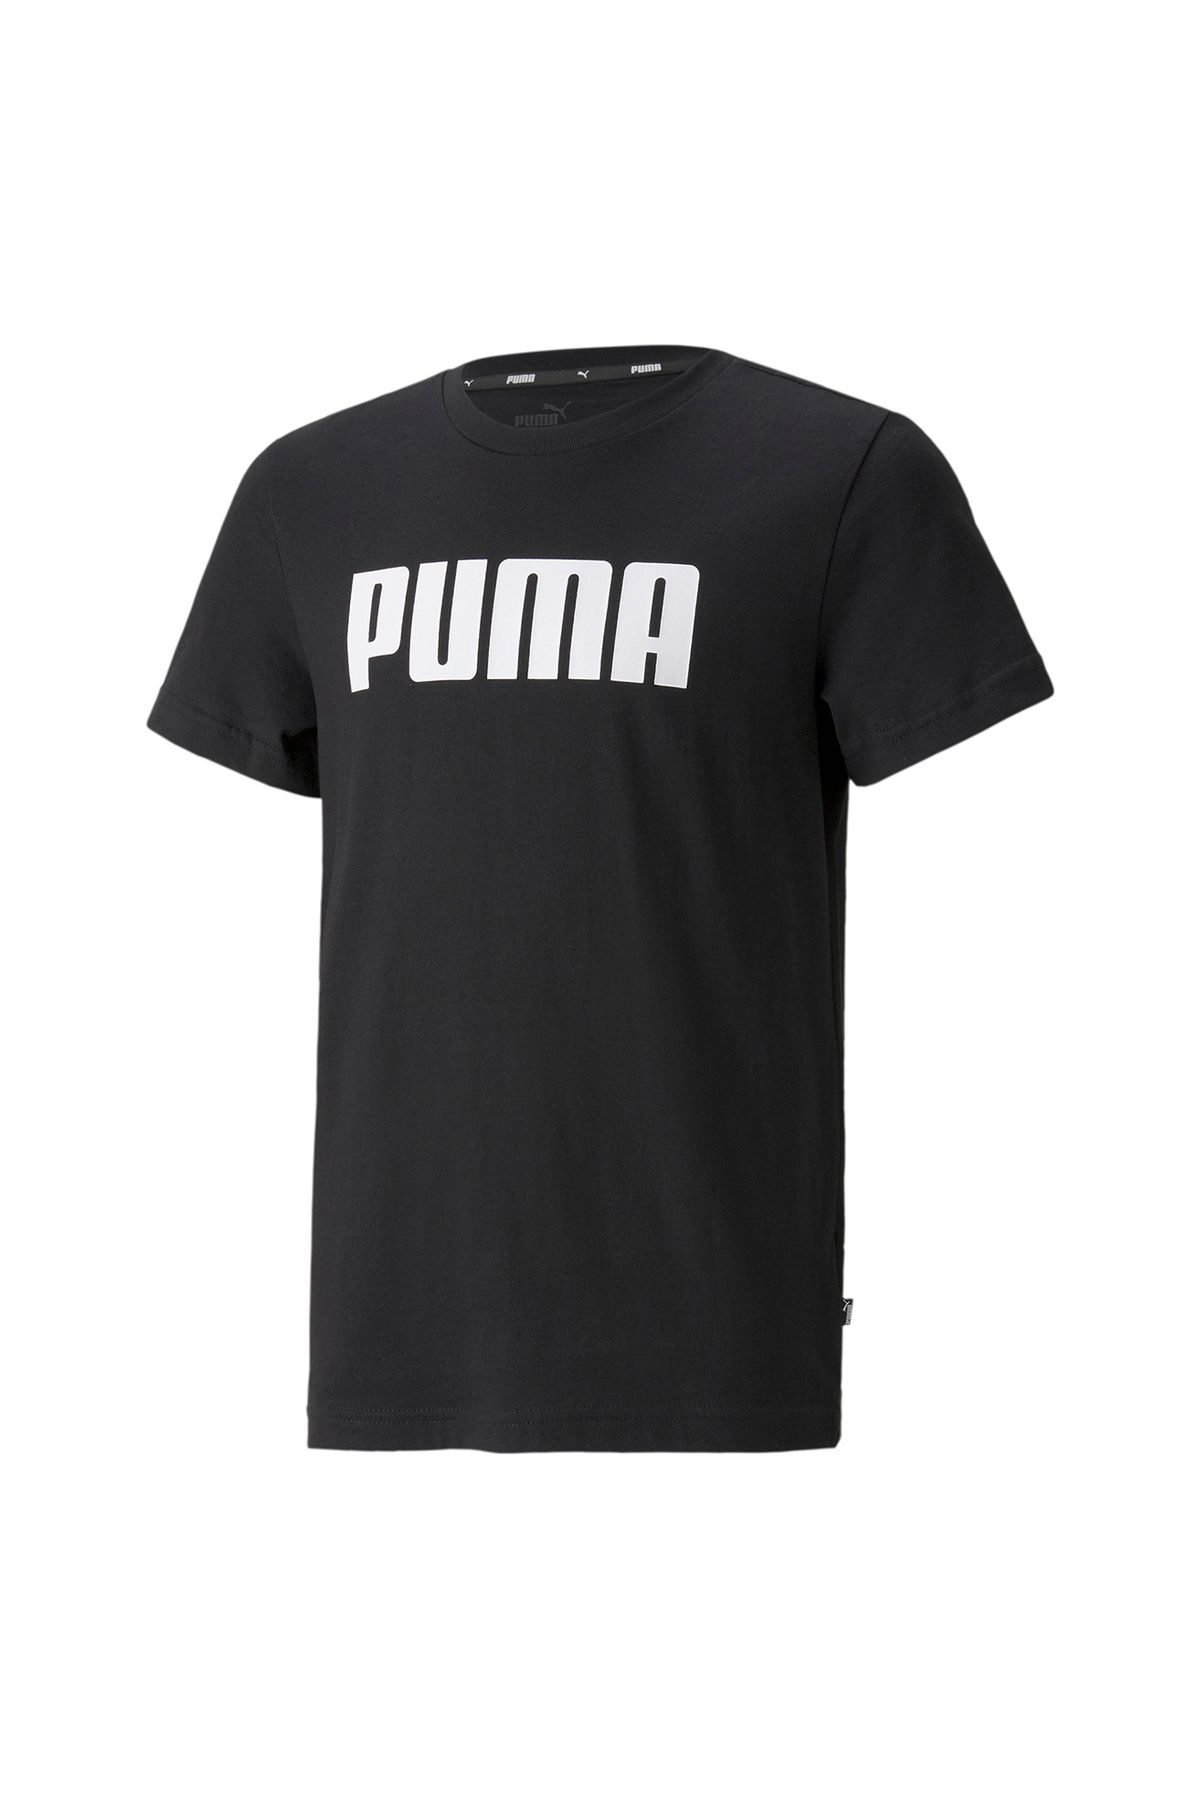 Puma Siyah Kız Çocuk Bisiklet Yaka Kısa Kollu Baskılı T-shirt 84759401 Boys Ess Tee